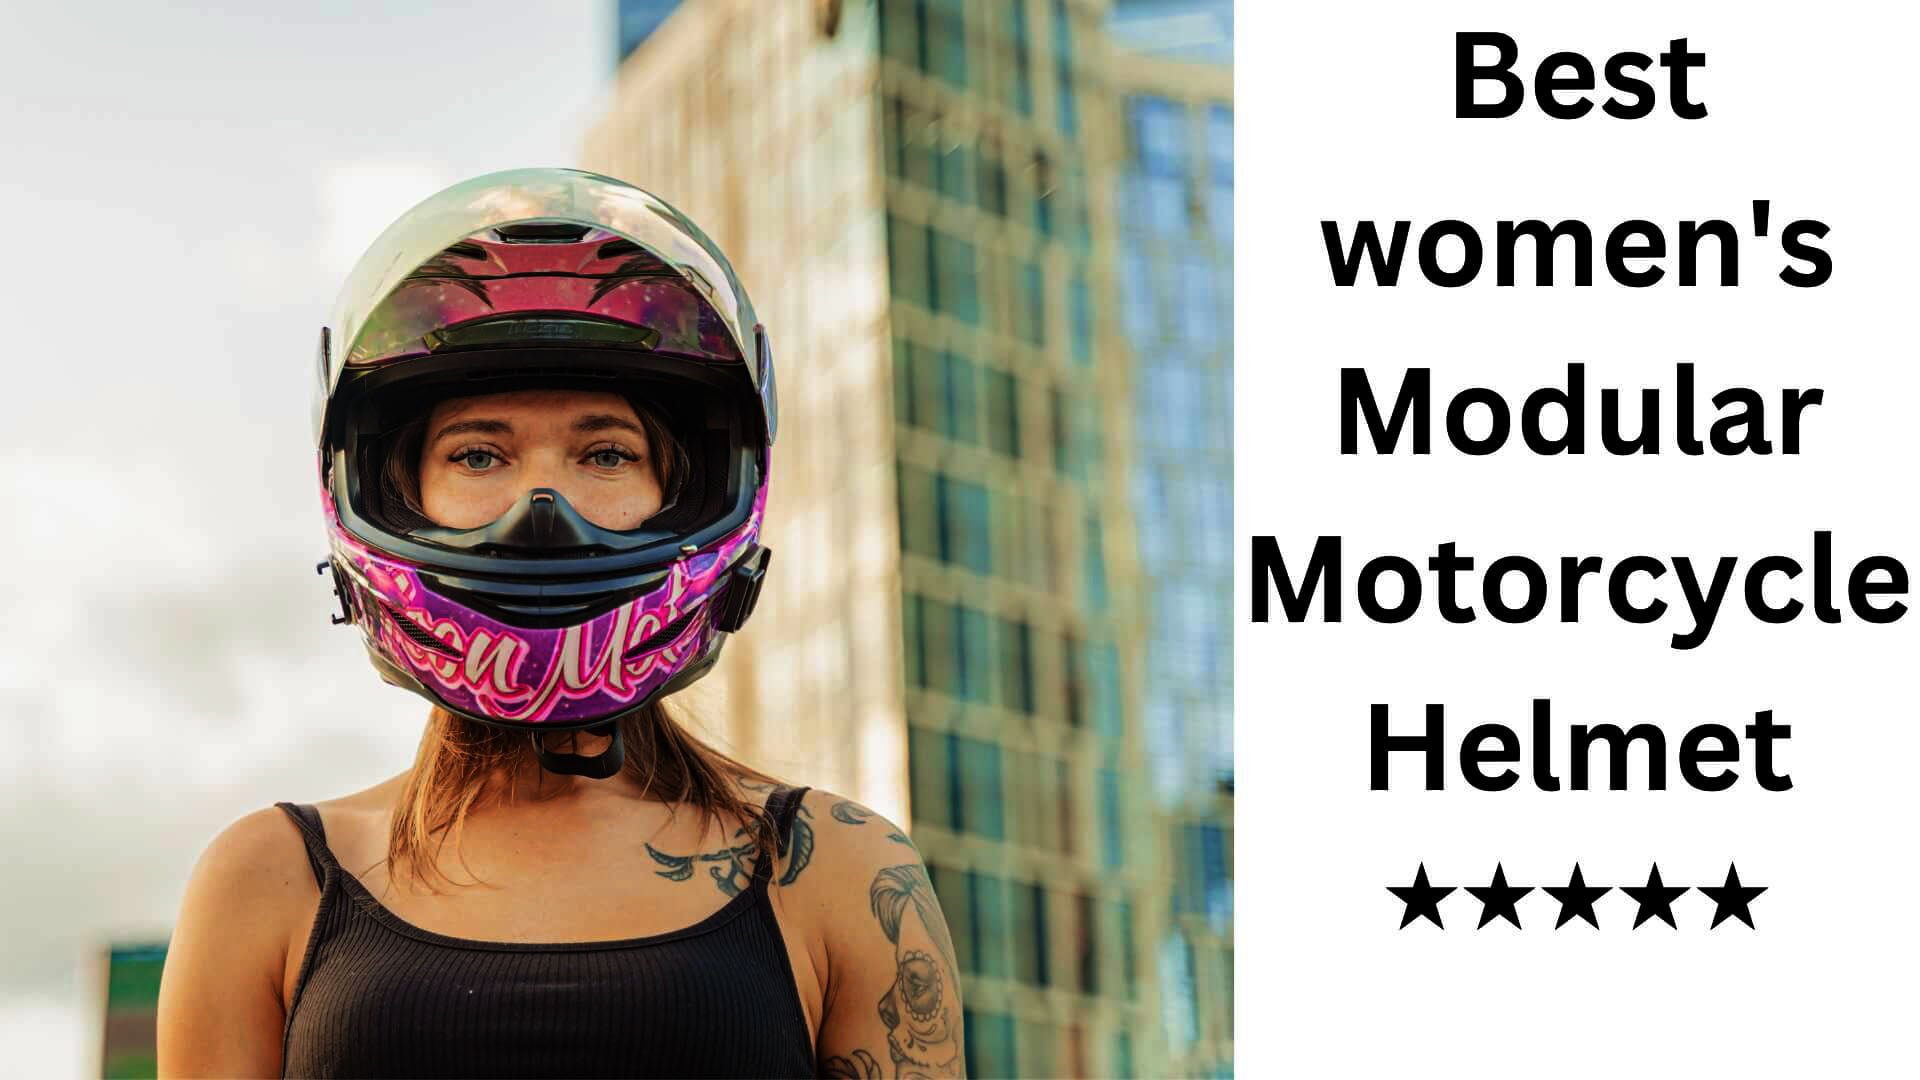 Best Womens Modular Motorcycle Helmet